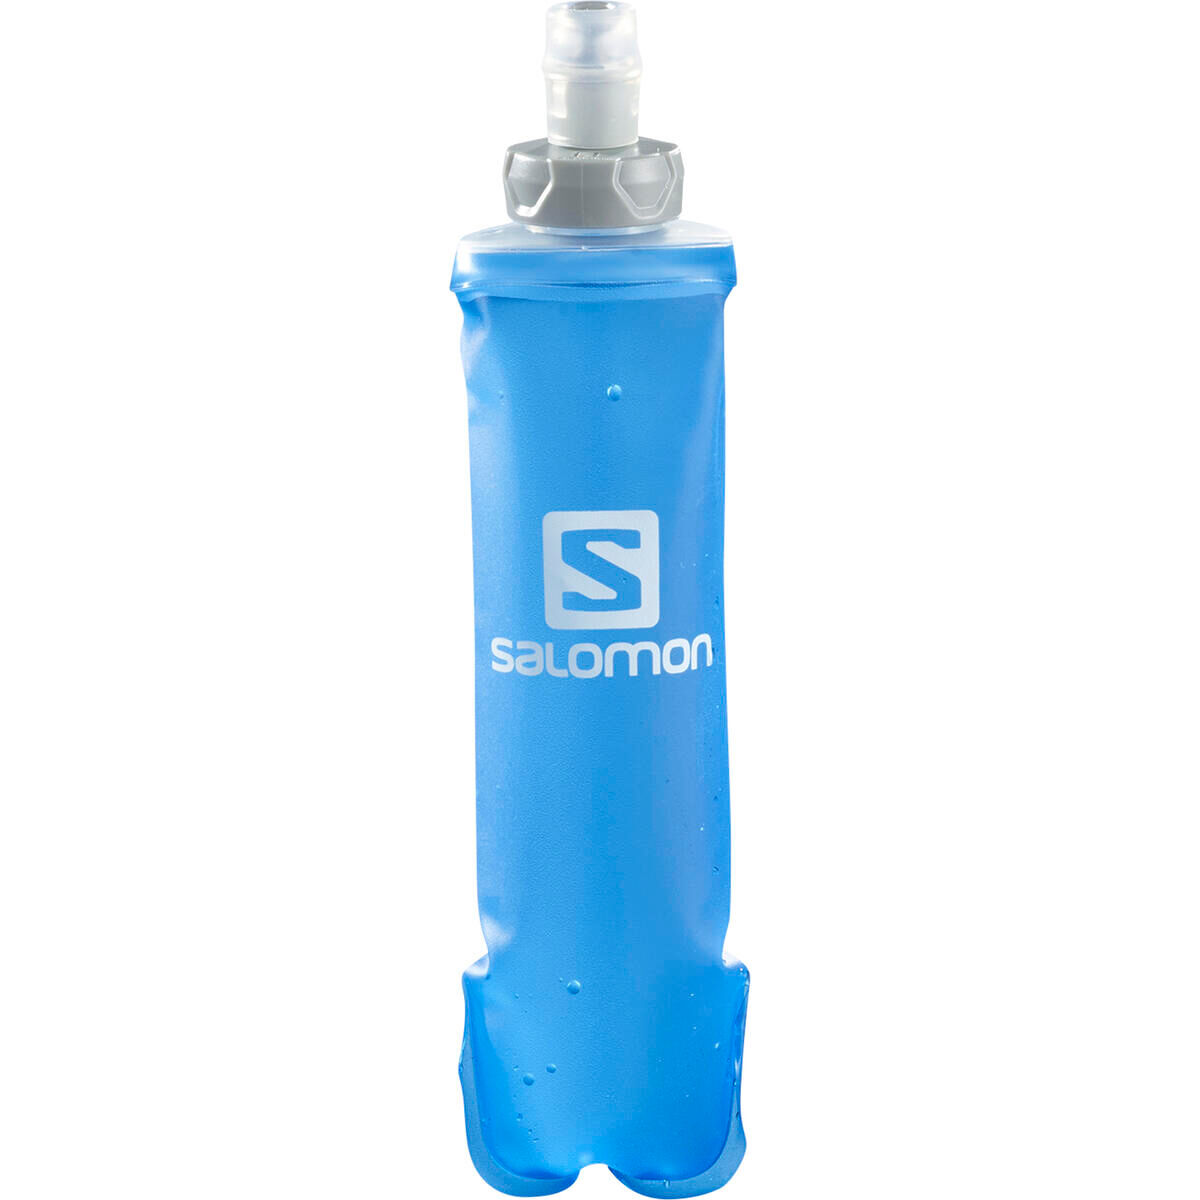 Salomon Soft Flask 250 ml - STD 28 - Drickflaska